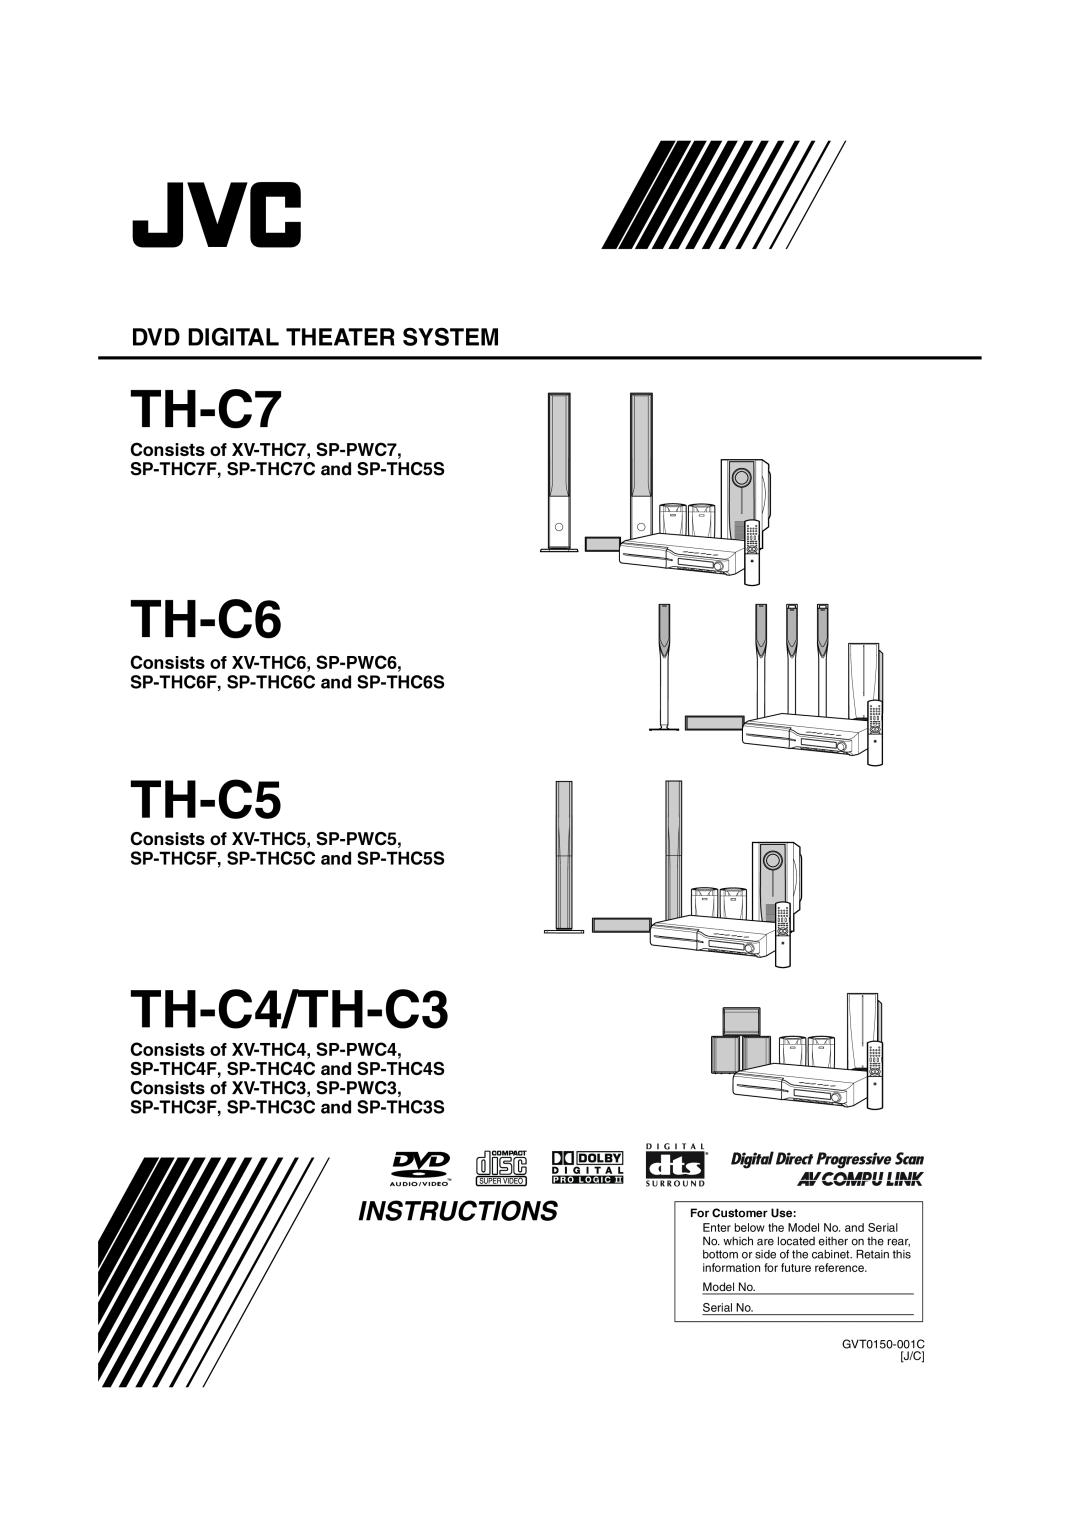 JVC TH-C6 manual TH-C7, TH-C5, TH-C4/TH-C3, Instructions, Dvd Digital Theater System 